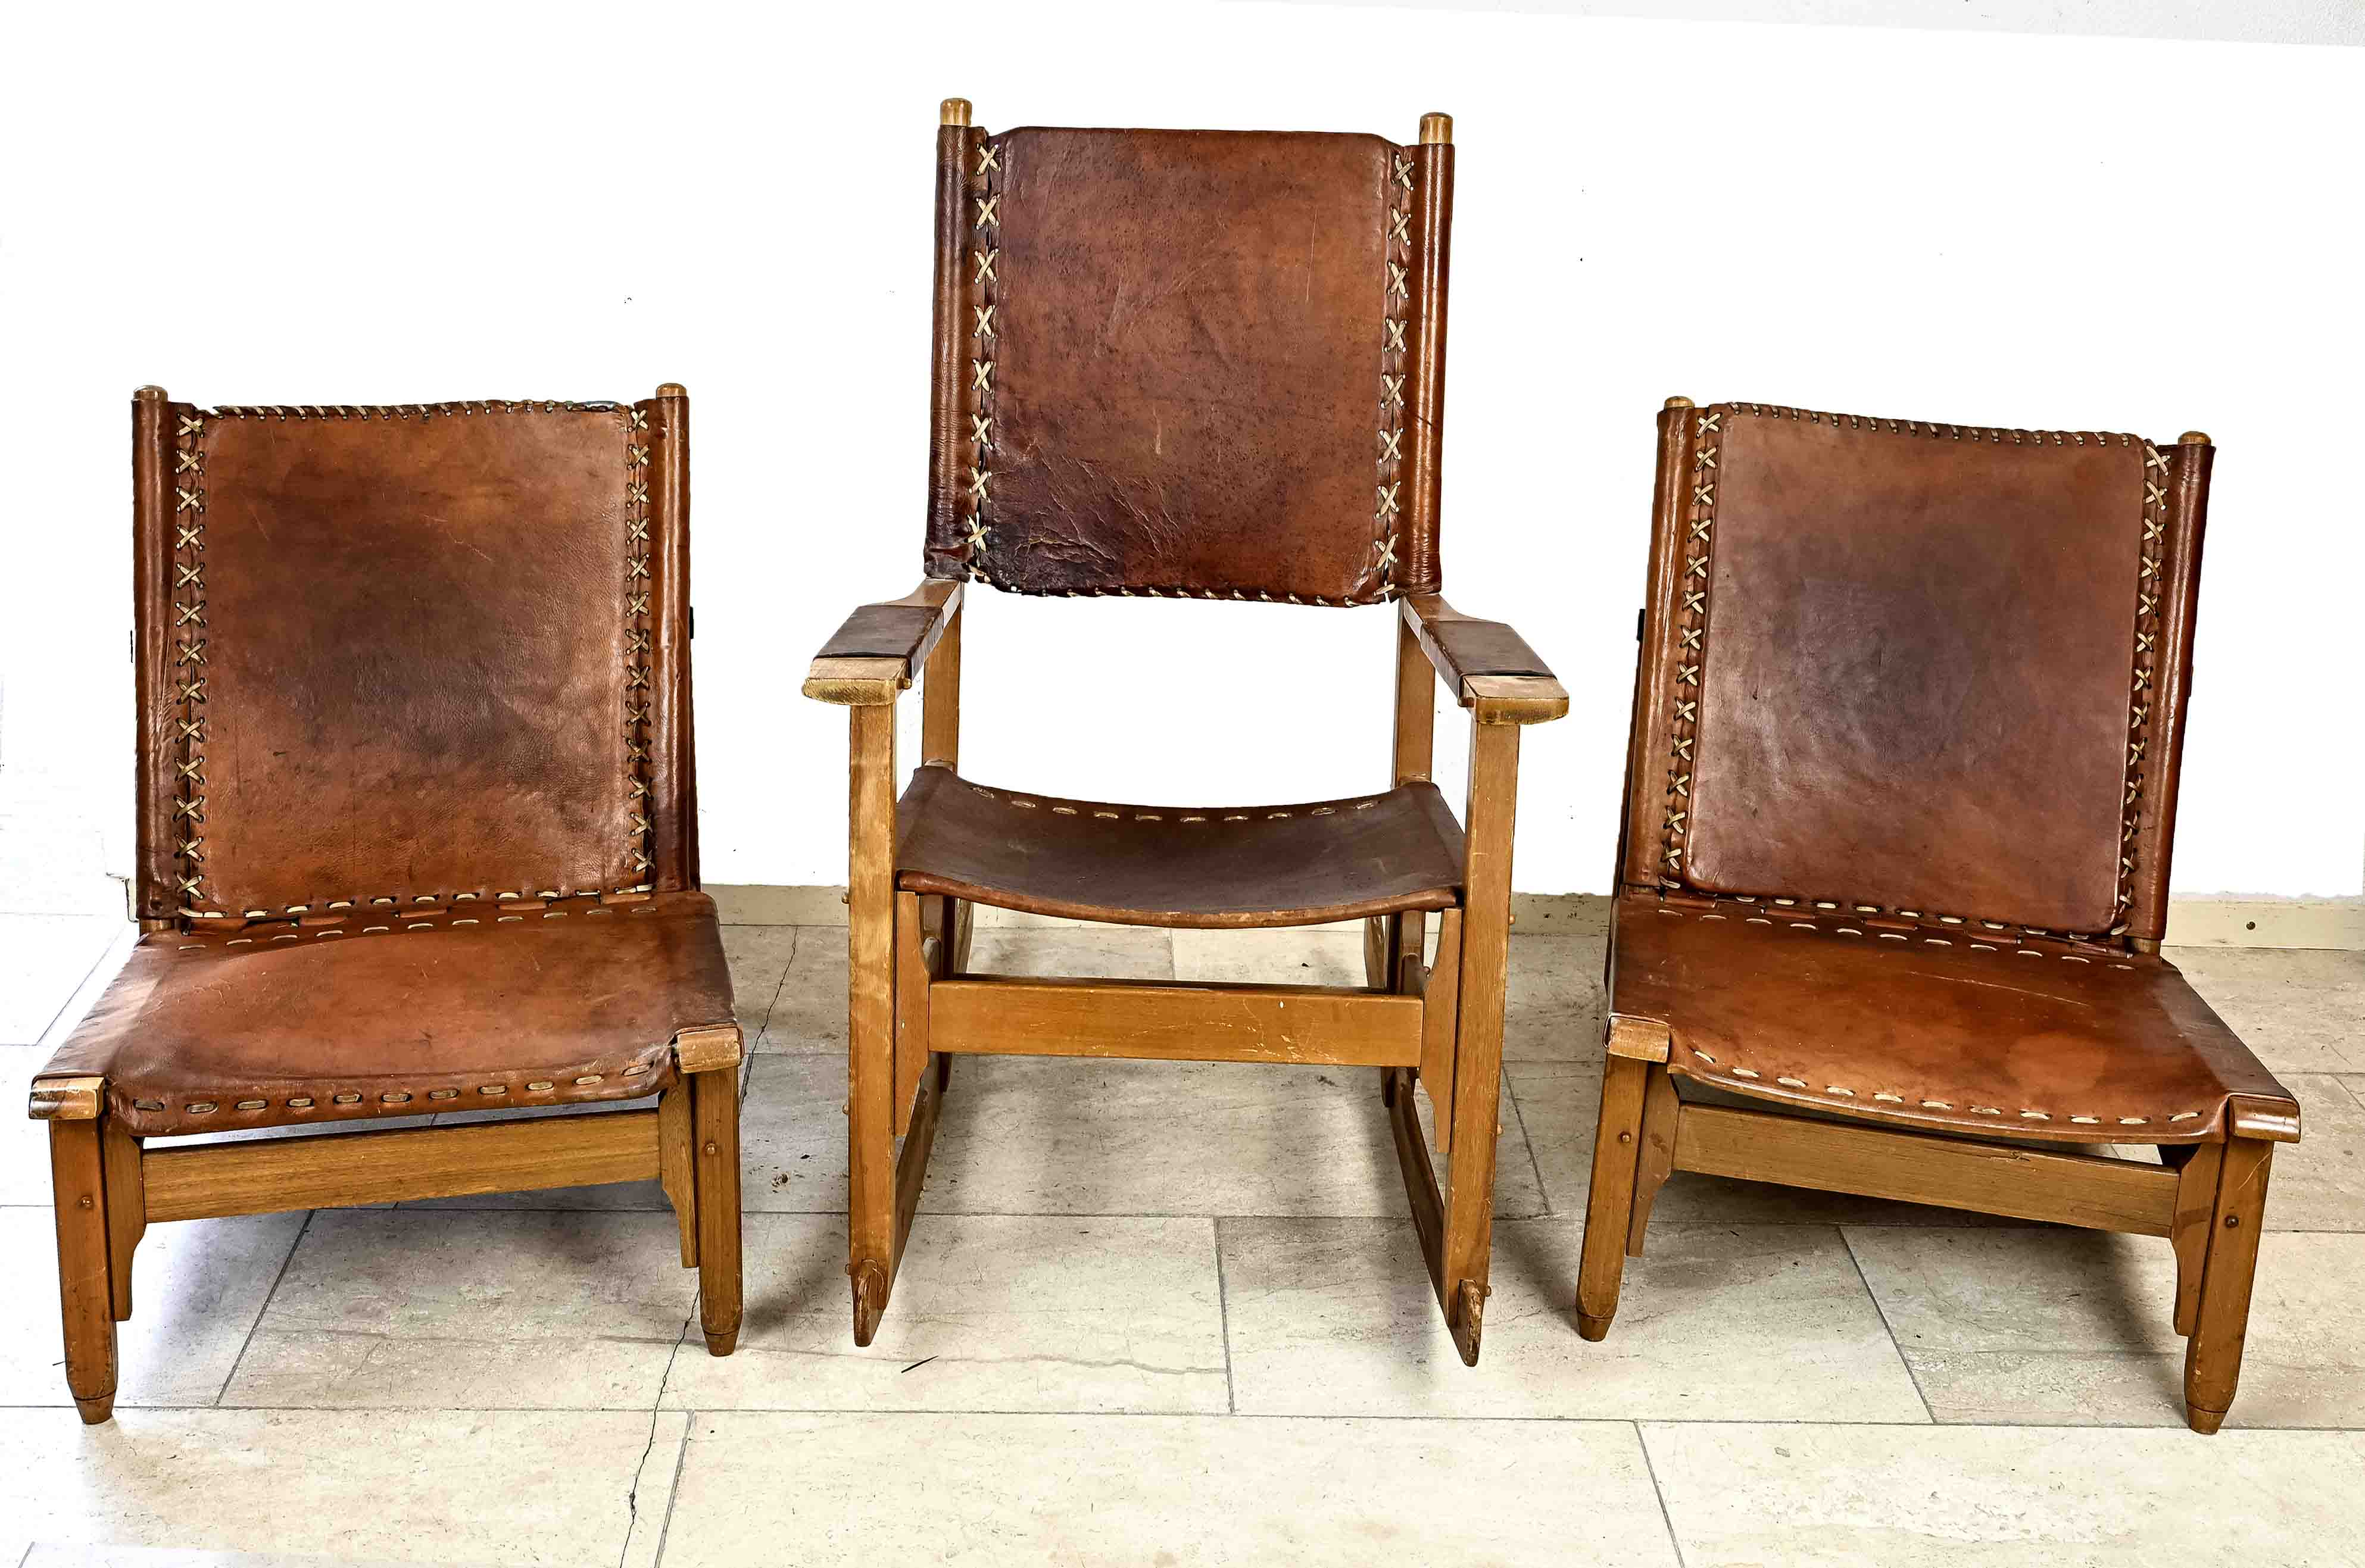 Three designer chairs